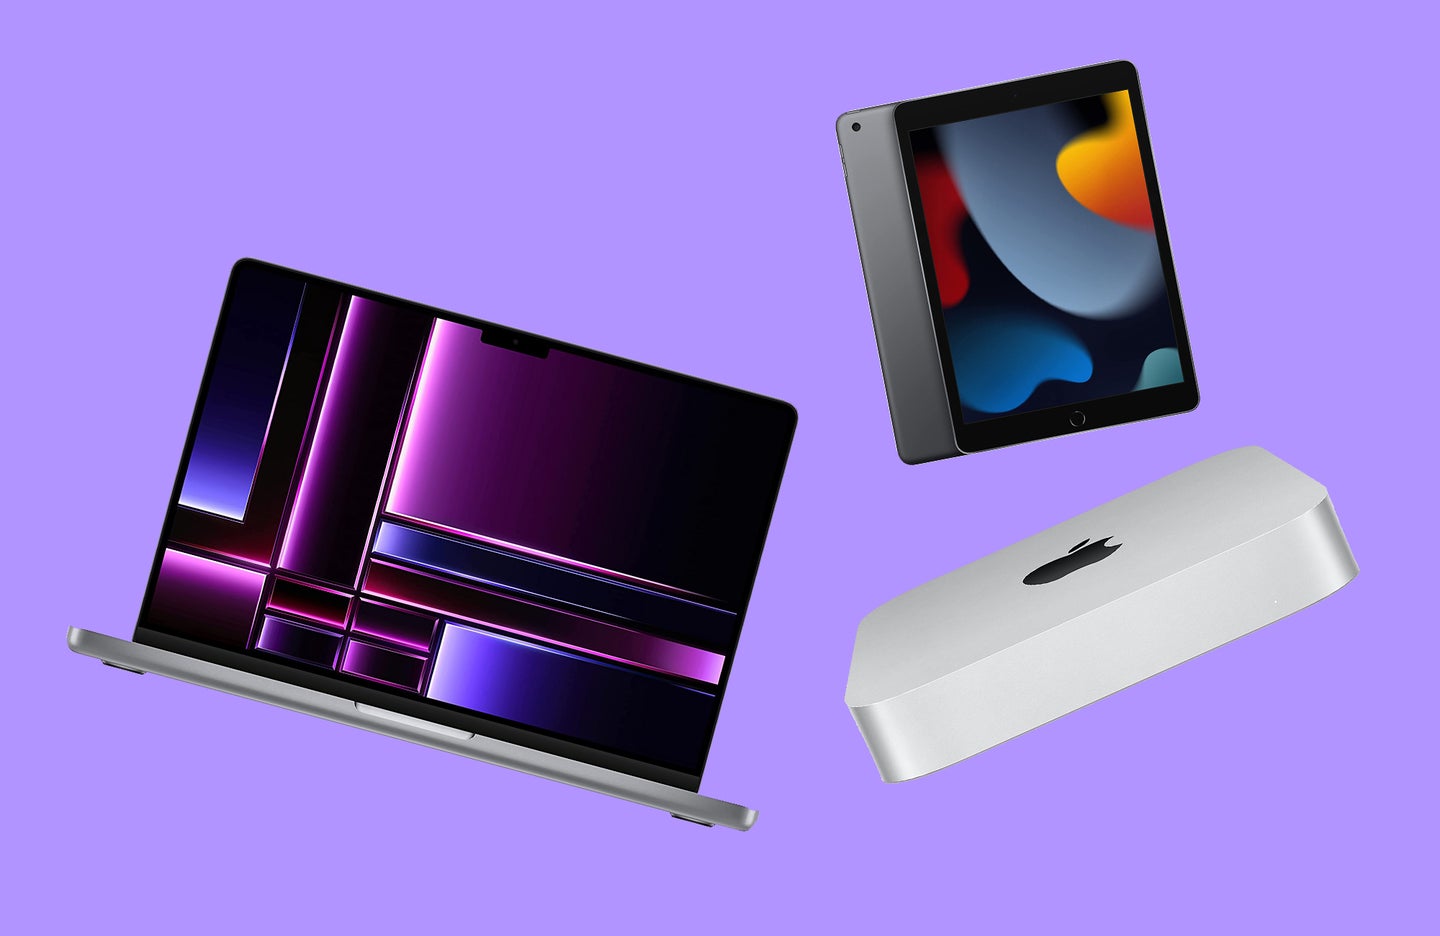 Mac mini, iPad, and Macbook Pro on a purple background